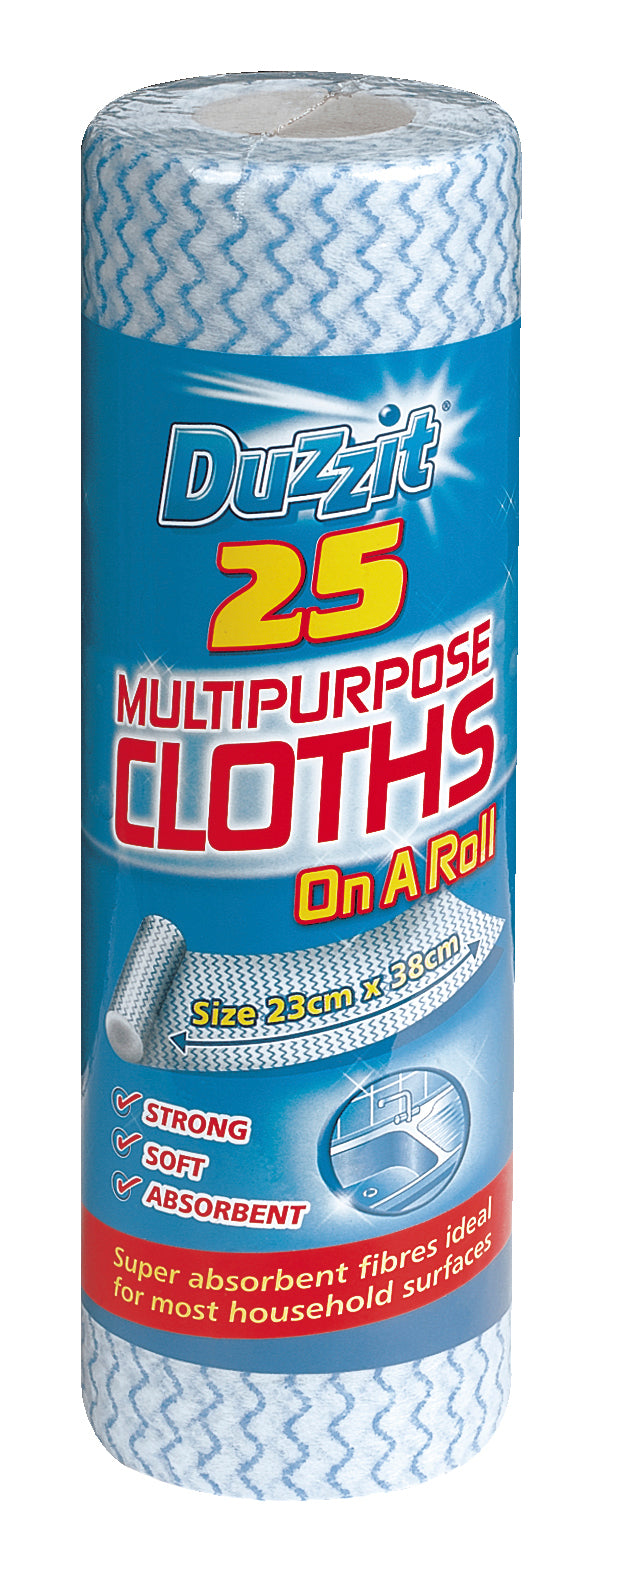 Duzzit - Multipurpose Cloths on a Roll 25Pk